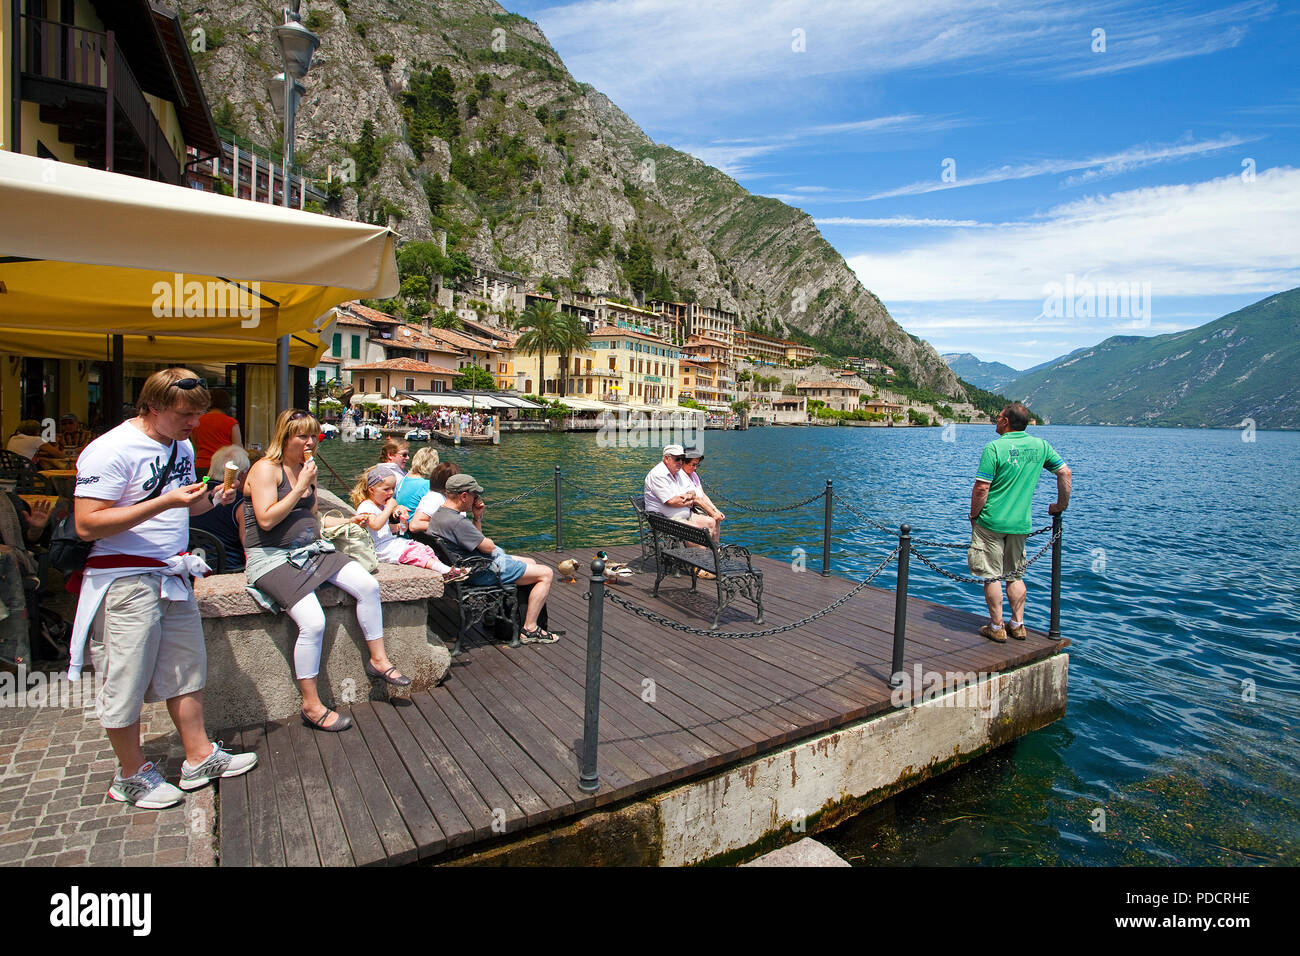 Tourist on a dock at lakeside of Limone, Limone sul Garda, Lake Garda, Lombardy, Italy Stock Photo